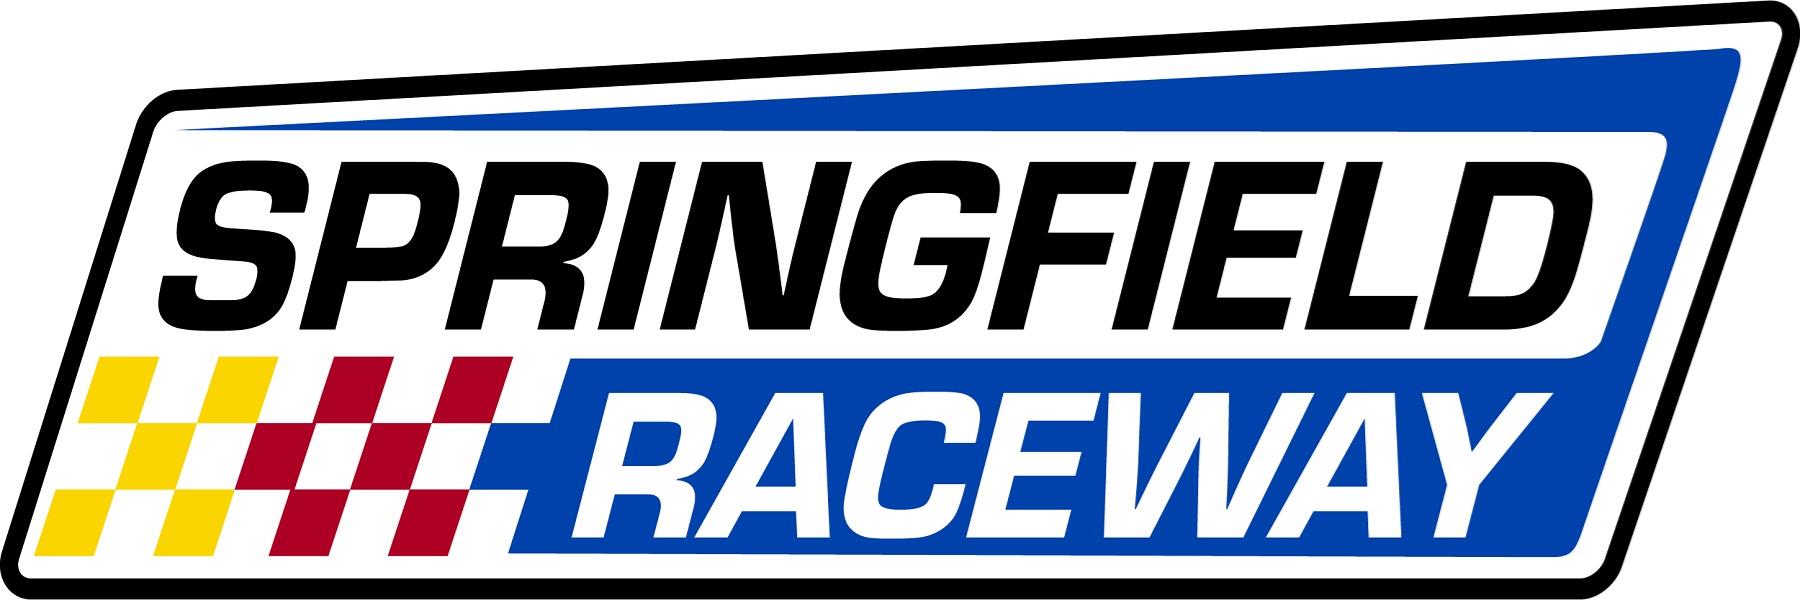 11/20/2021 - Springfield Raceway